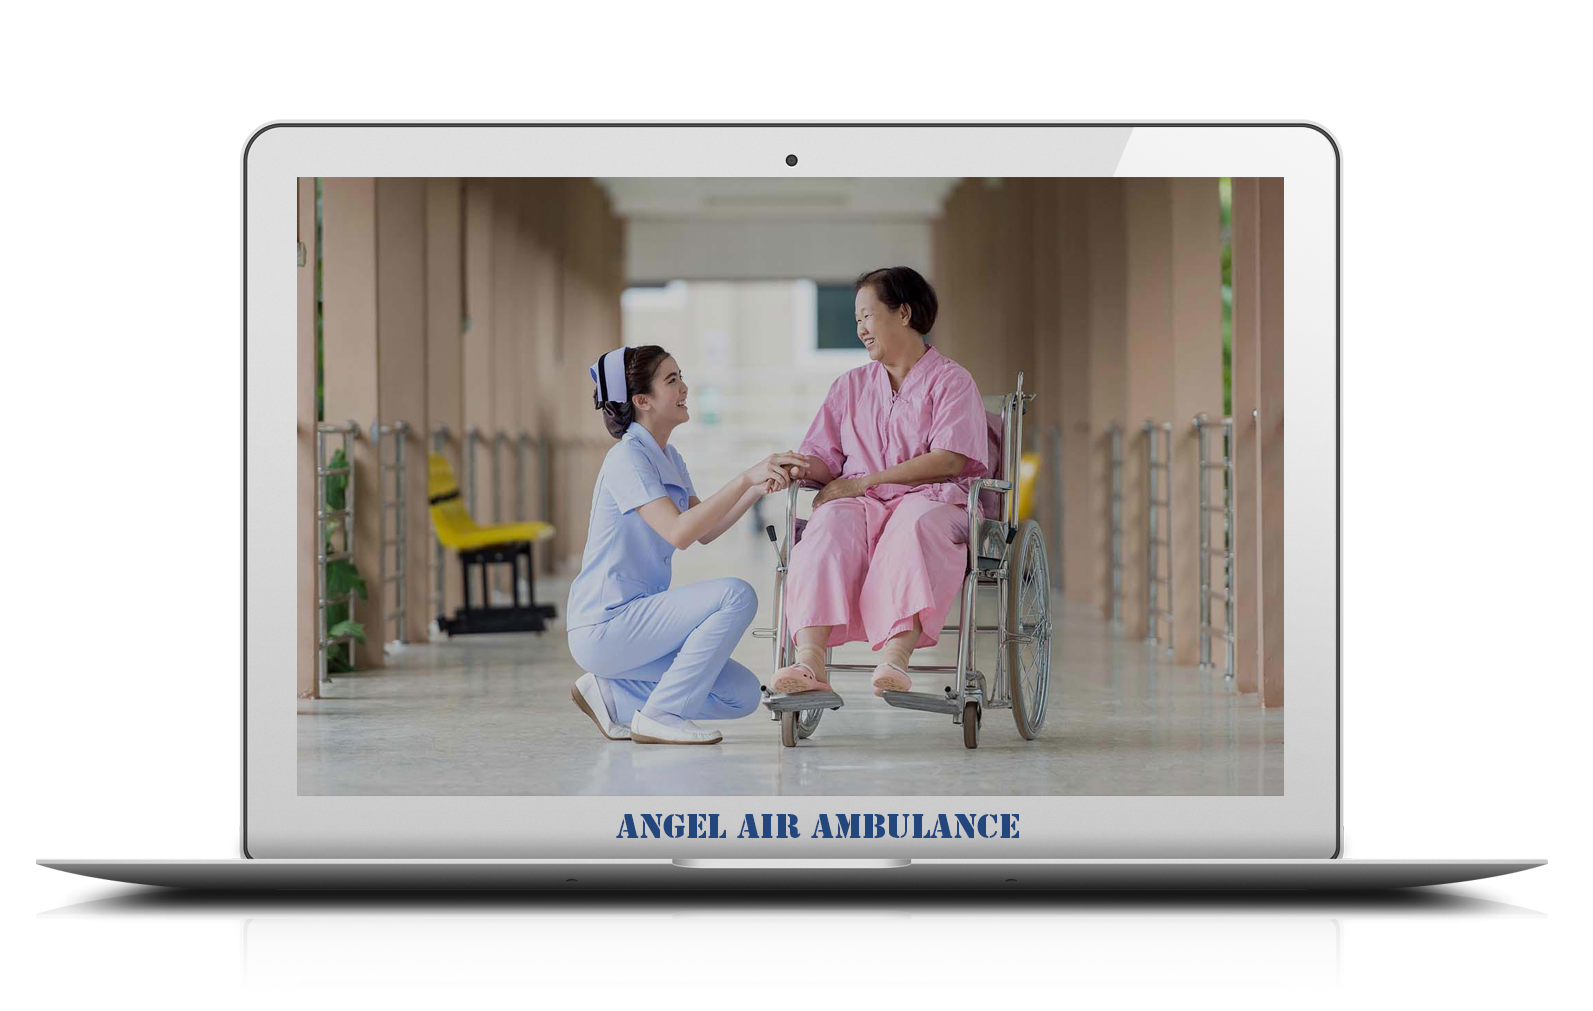 Angel Air Ambulance provider in Delhi